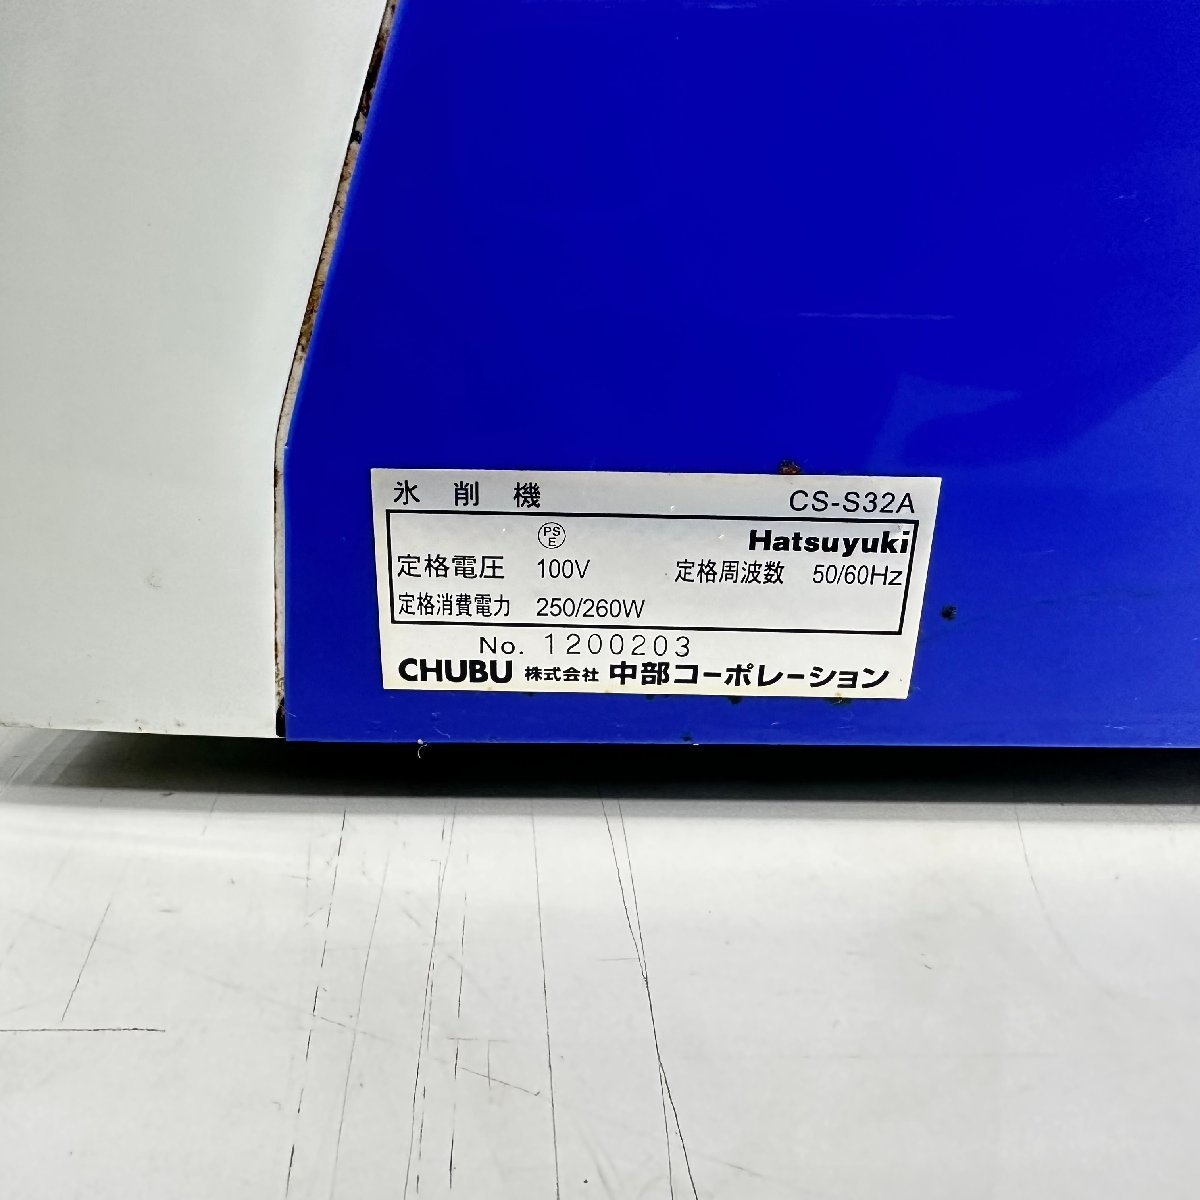 #*[1] Hatsuyuki CS-S32A лёд ломтерезка &kla автомобиль -CHUBU Chuubu корпорация лед . рабочий товар 5/072601a*#